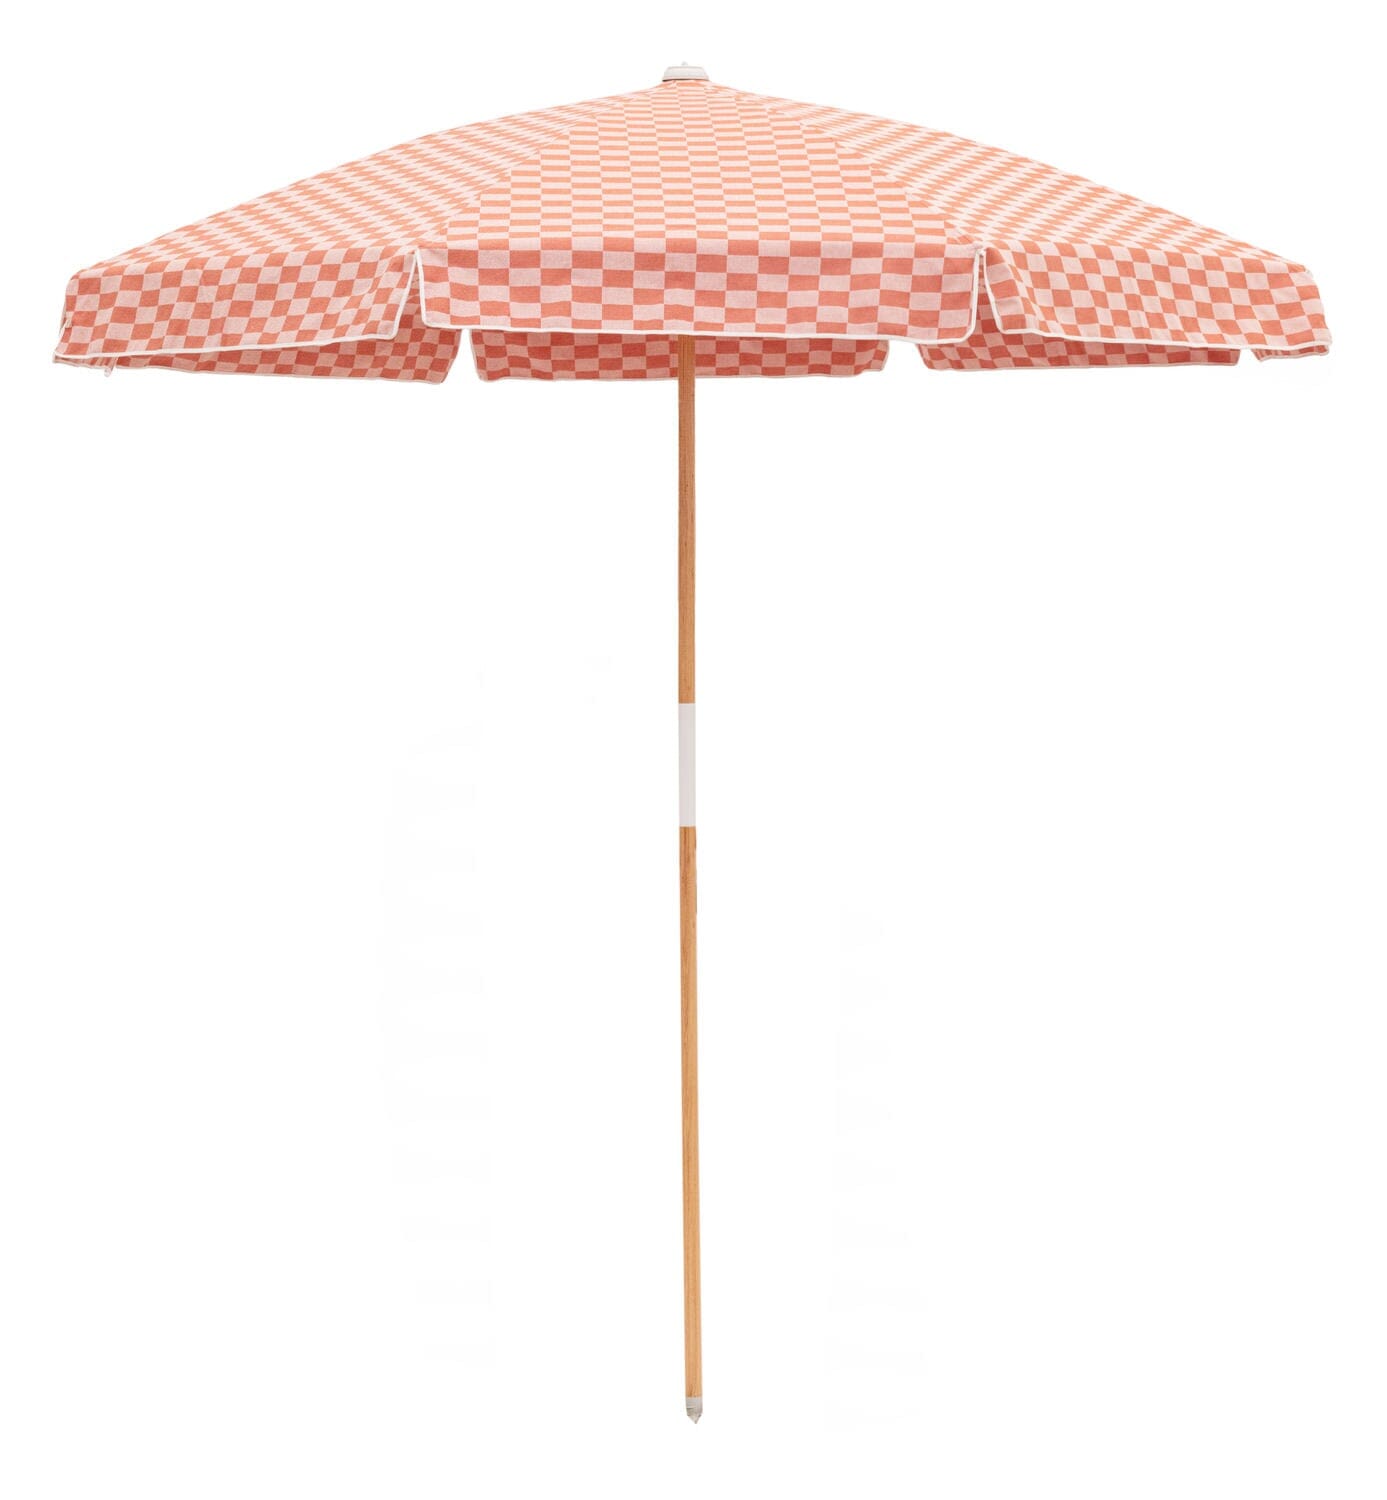 The Amalfi Umbrella - Le Sirenuse Check